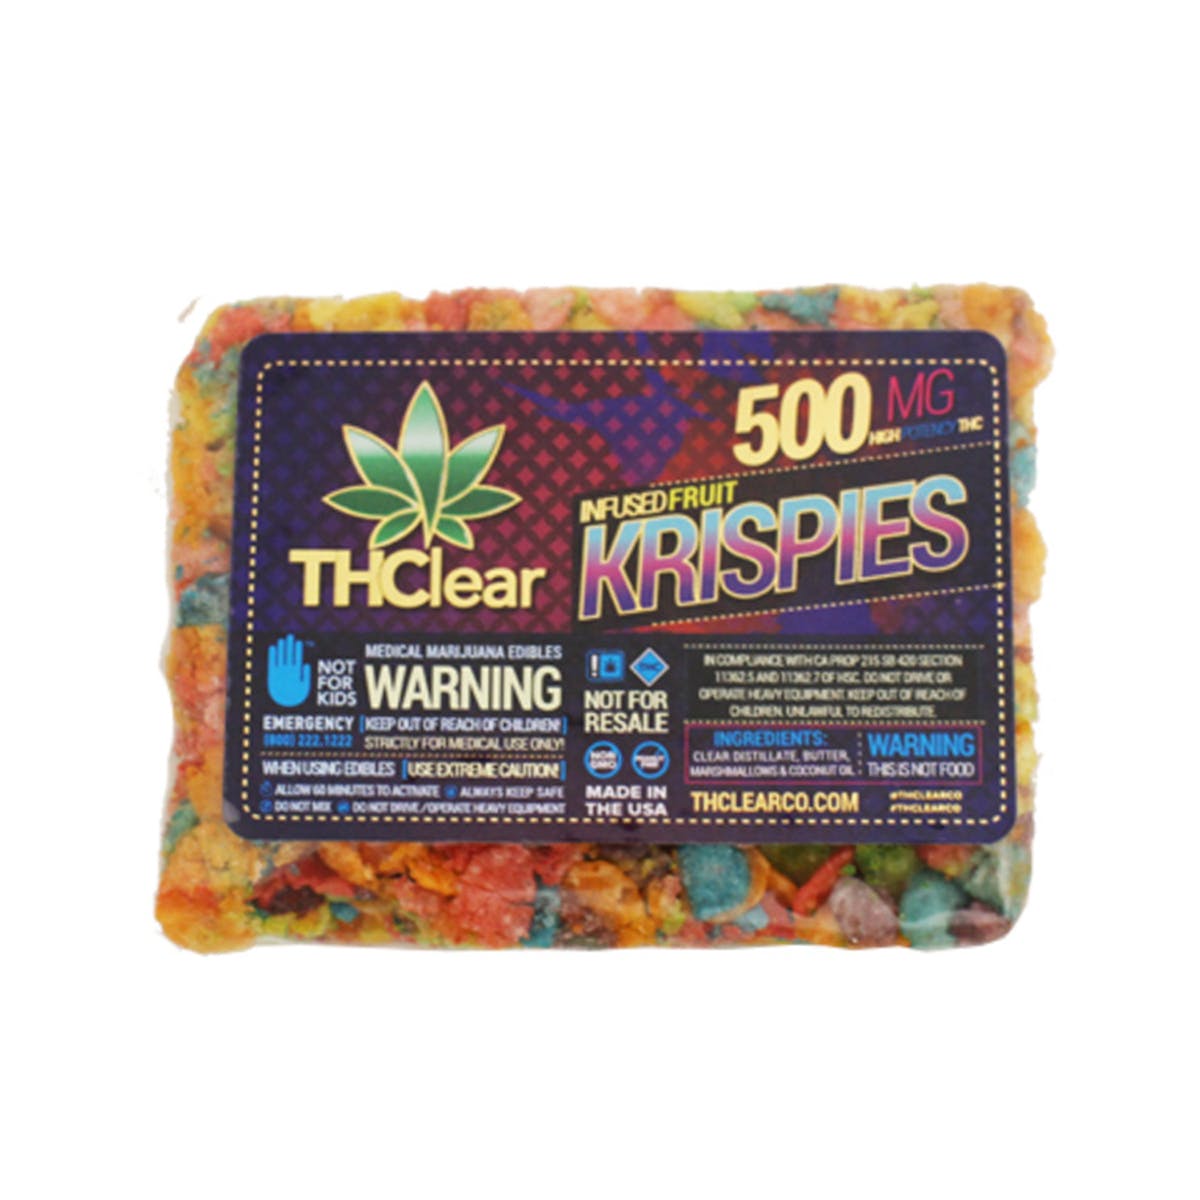 marijuana-dispensaries-114-n-brookhurst-st-anaheim-fruit-krispies-cereal-bar-500mg